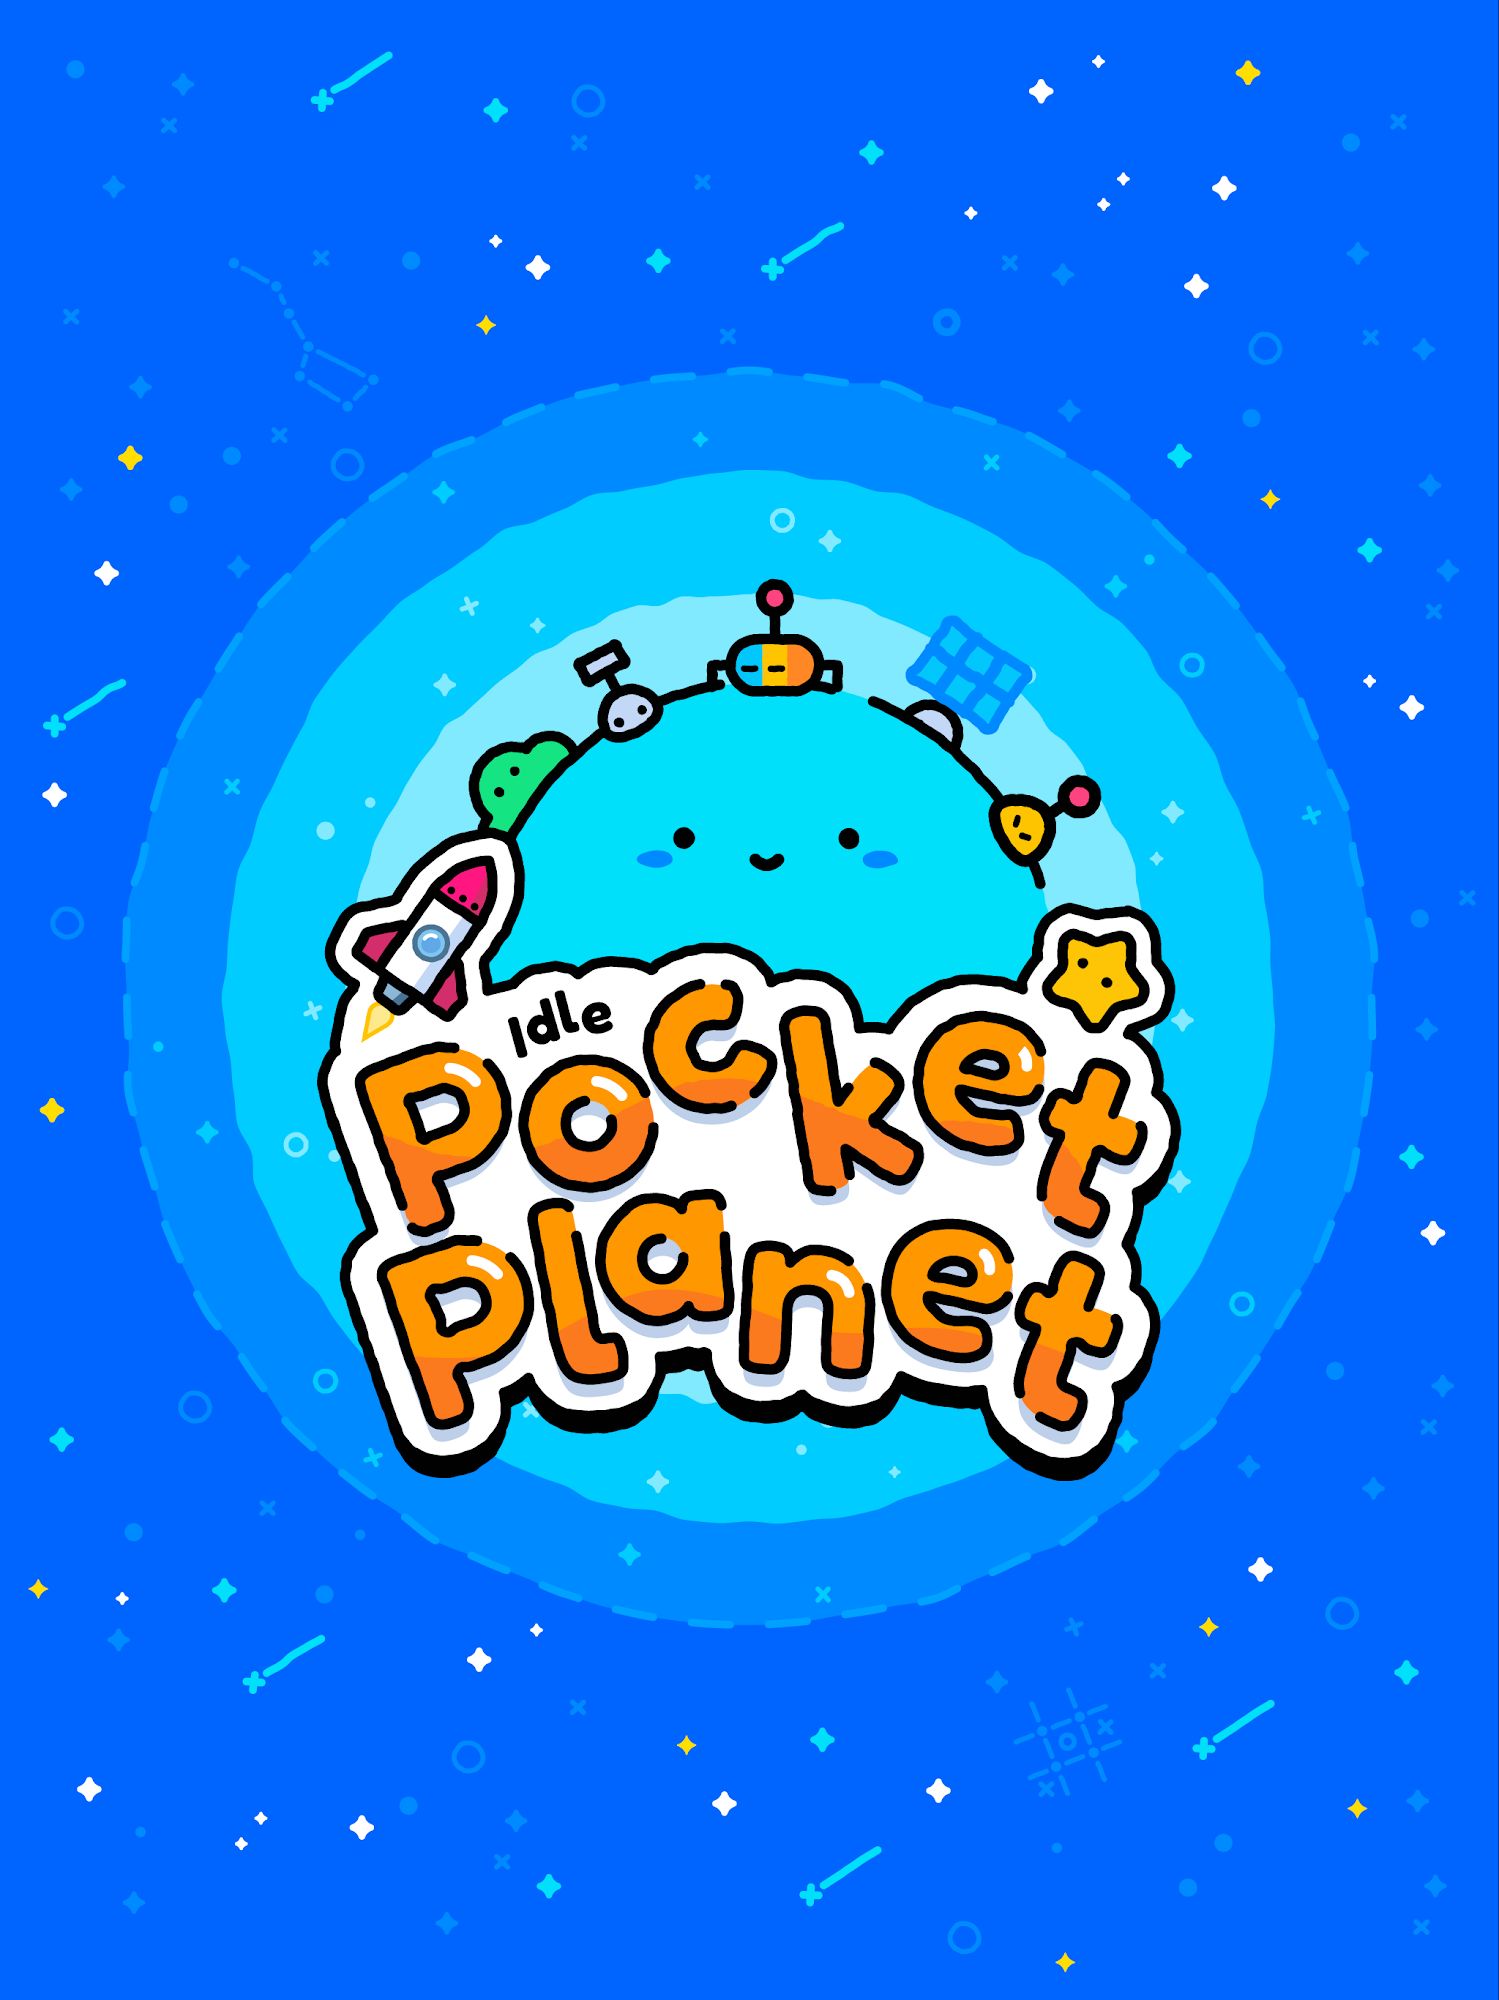 Idle Pocket Planet